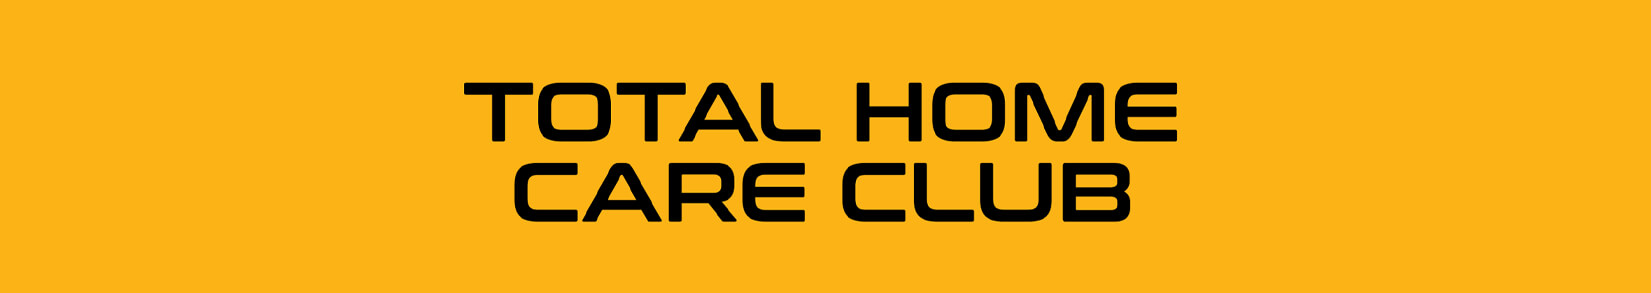 Total Home Care Club